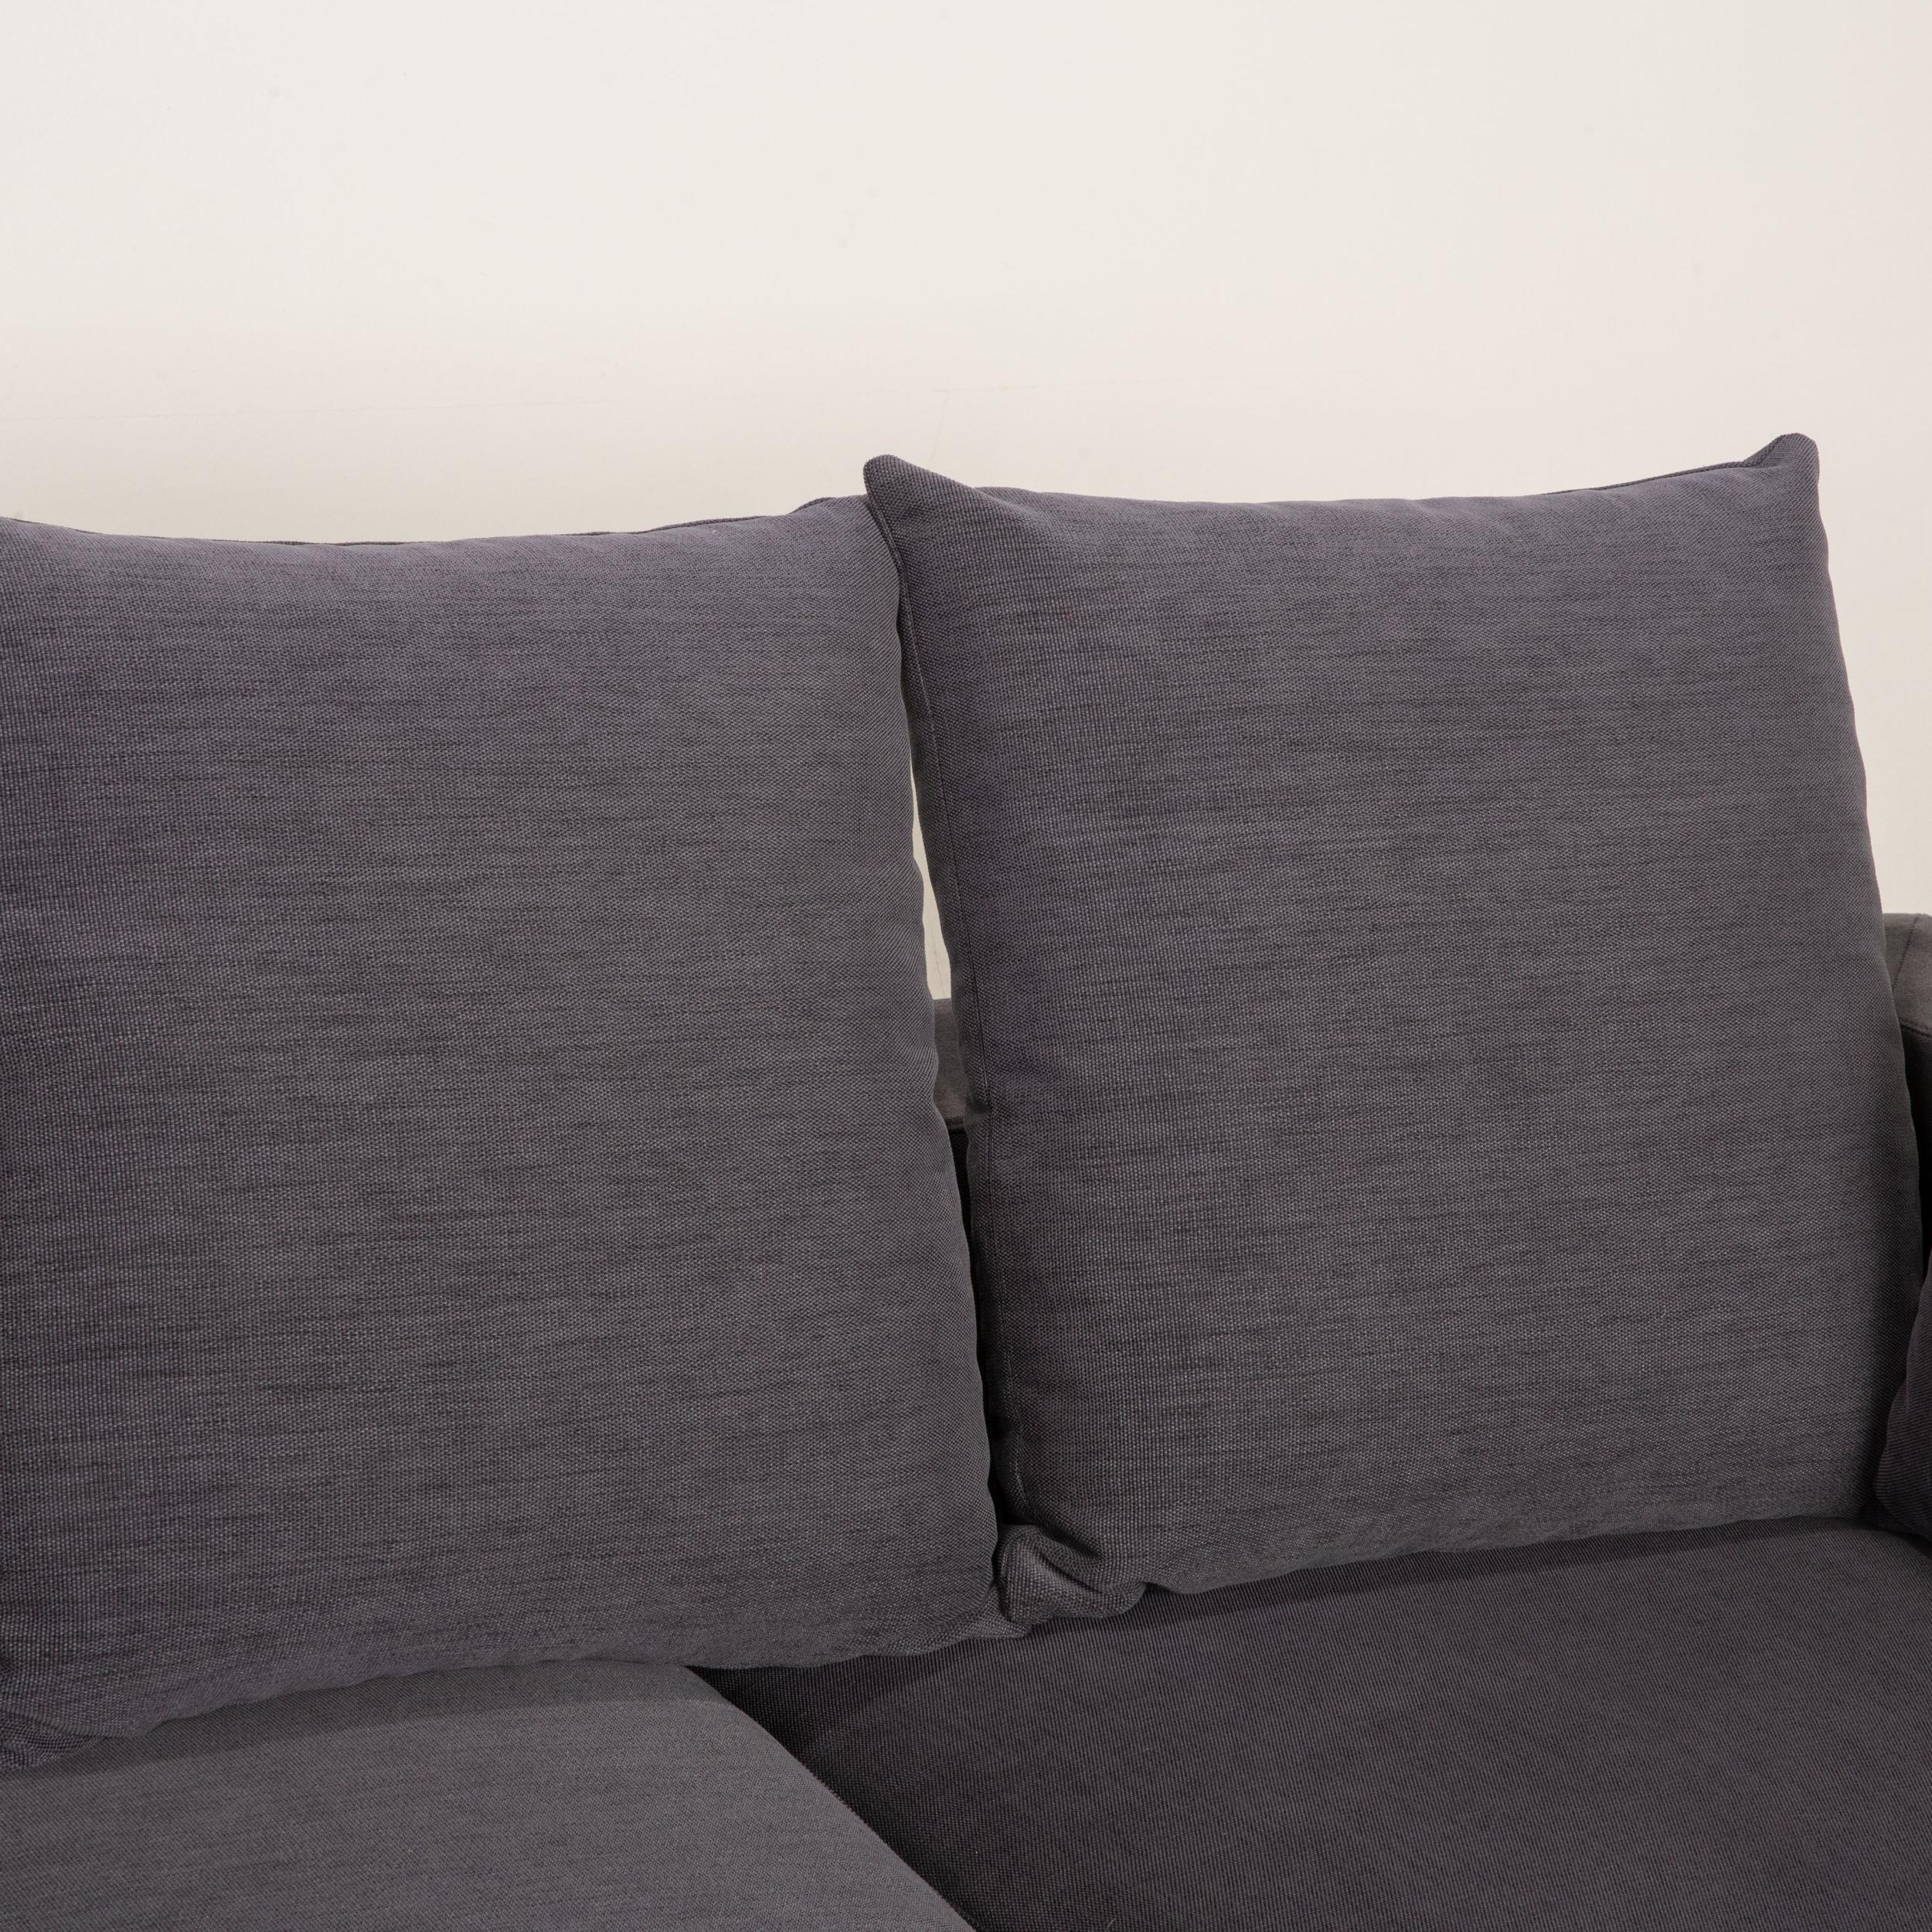 bo concepts sofa